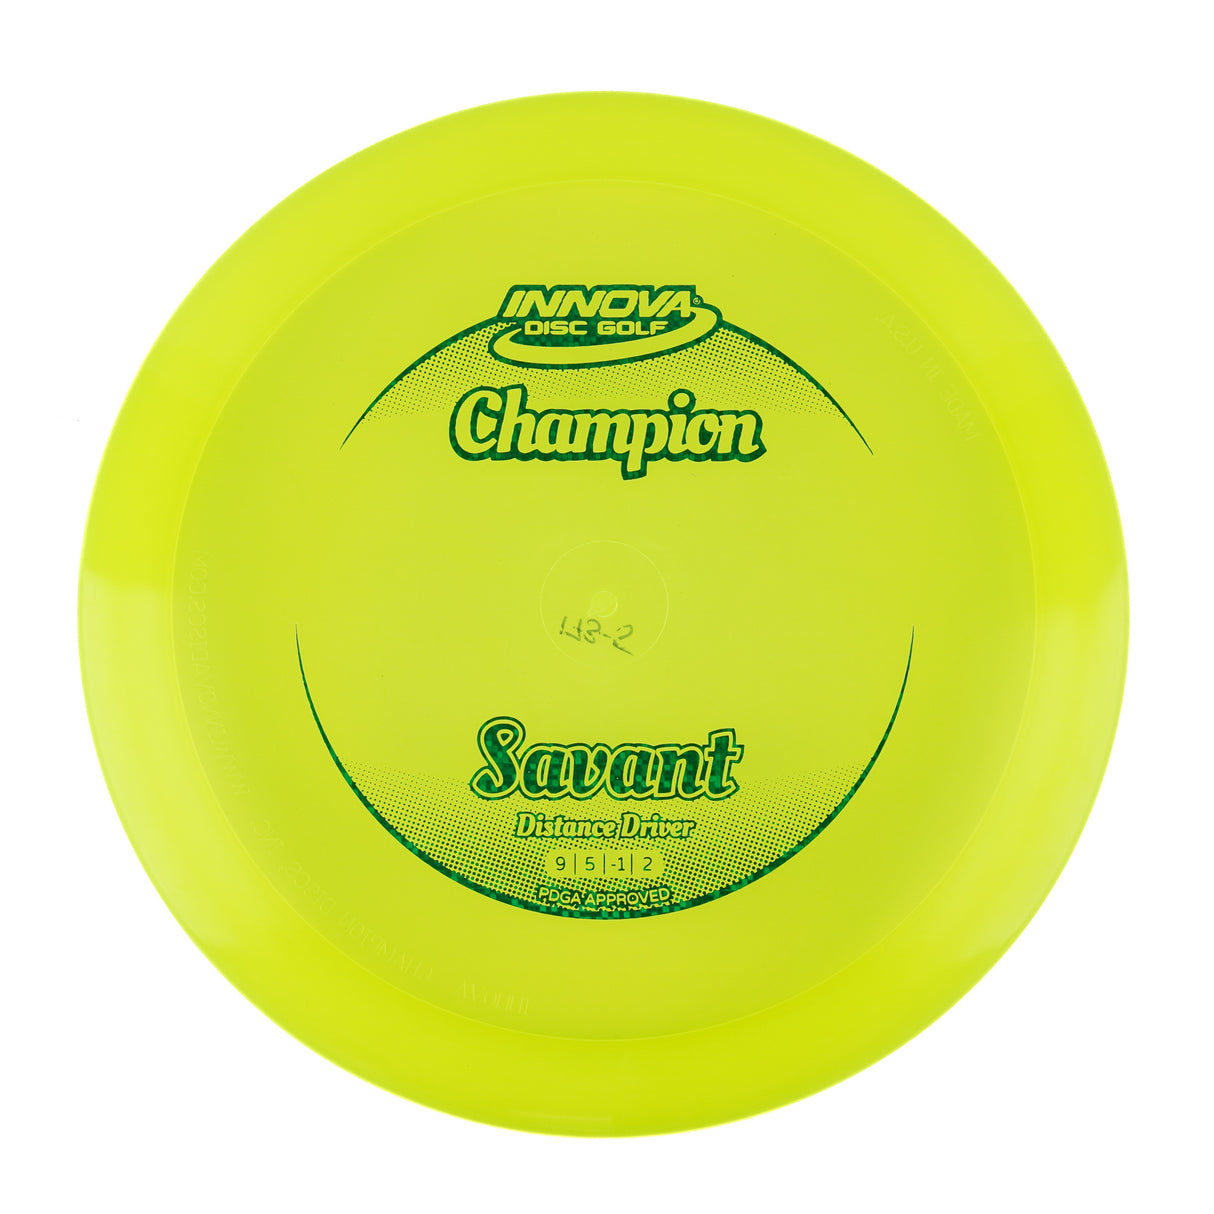 Innova Savant - Champion 177g | Style 0001